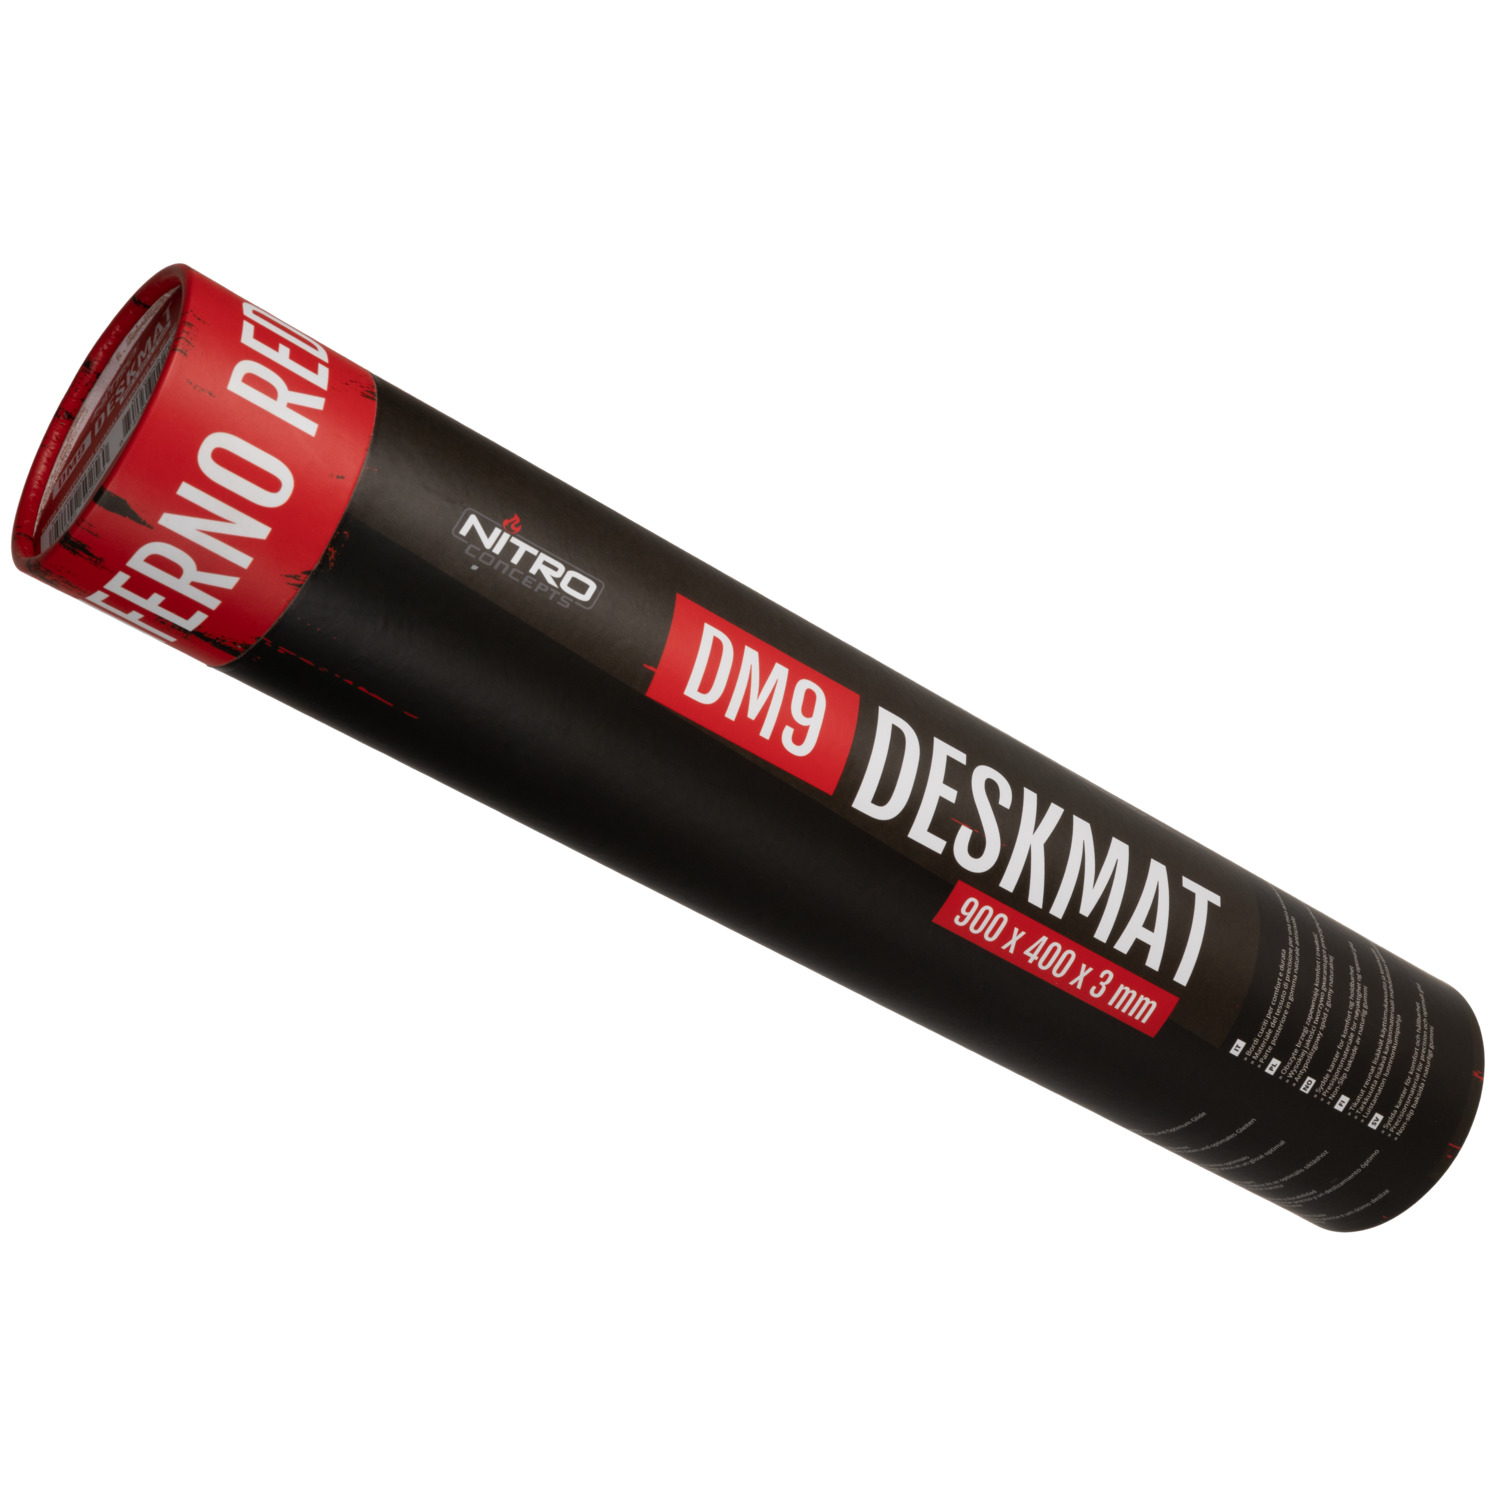 Deskmat DM9 - 900x400mm - INFERNO RED